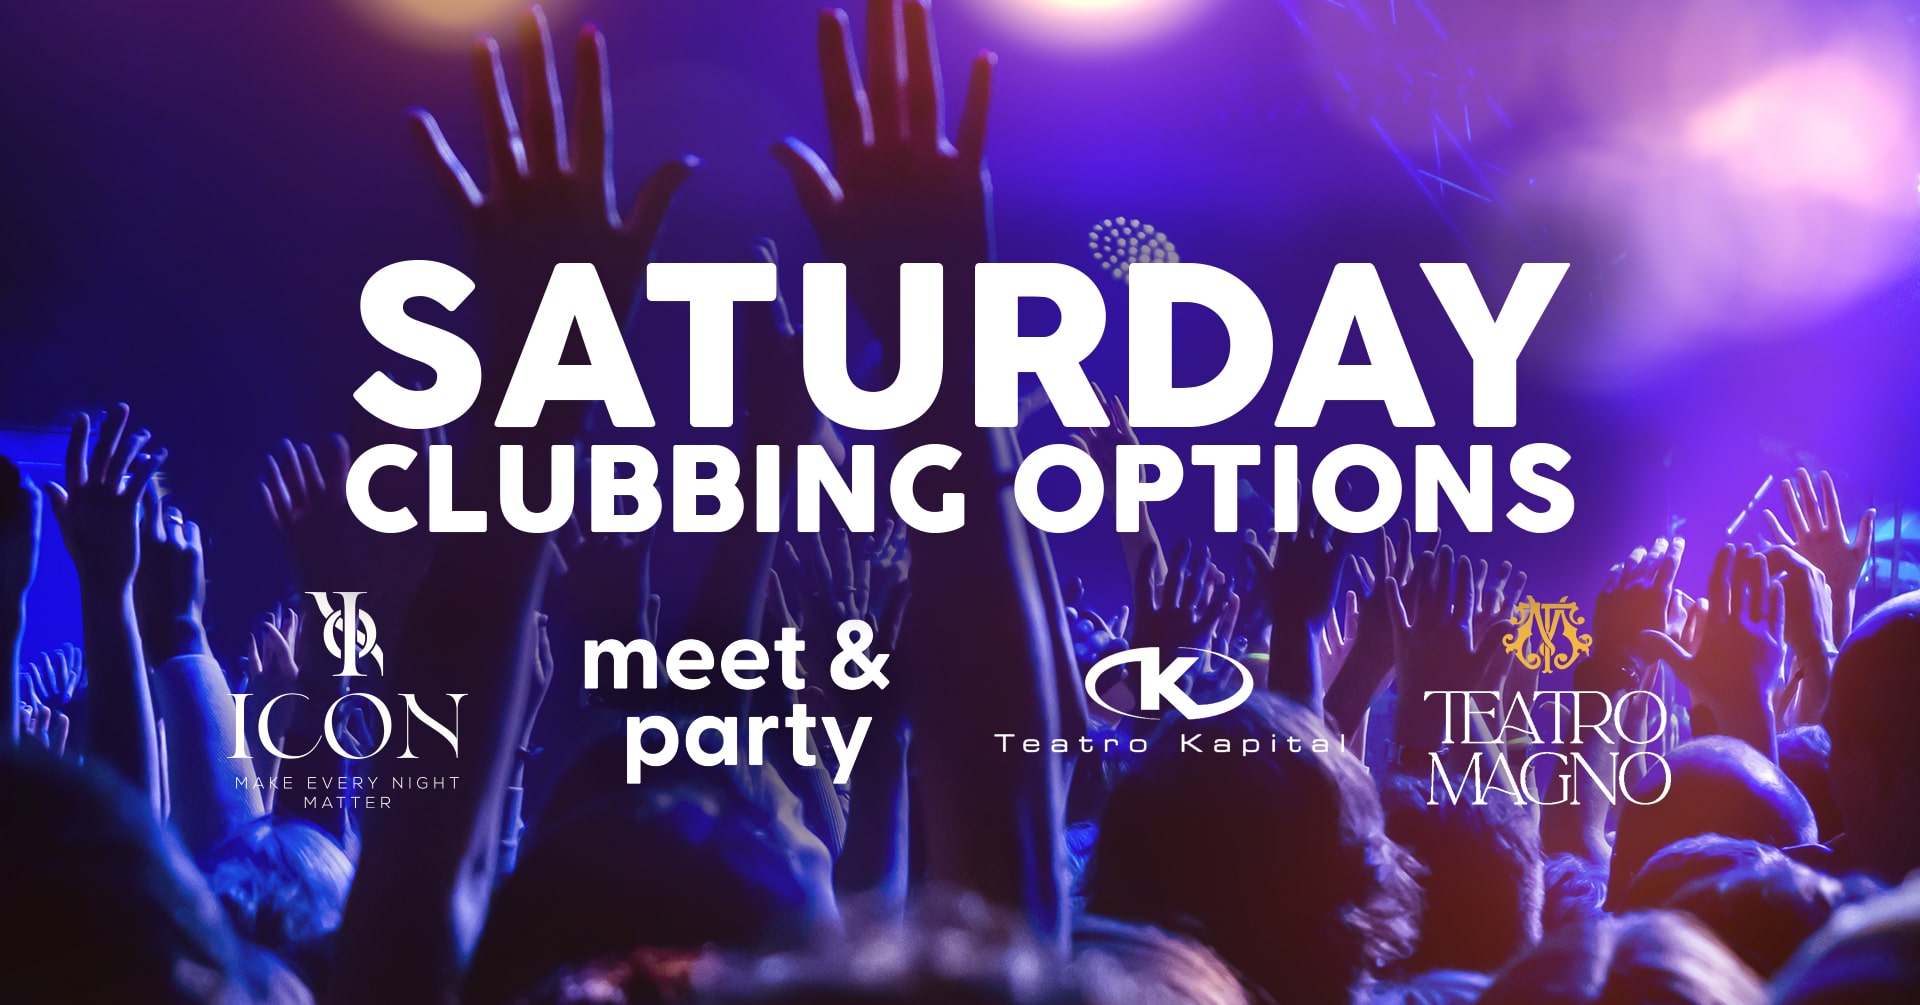 fb-event-saturday-clubbing-options-madrid